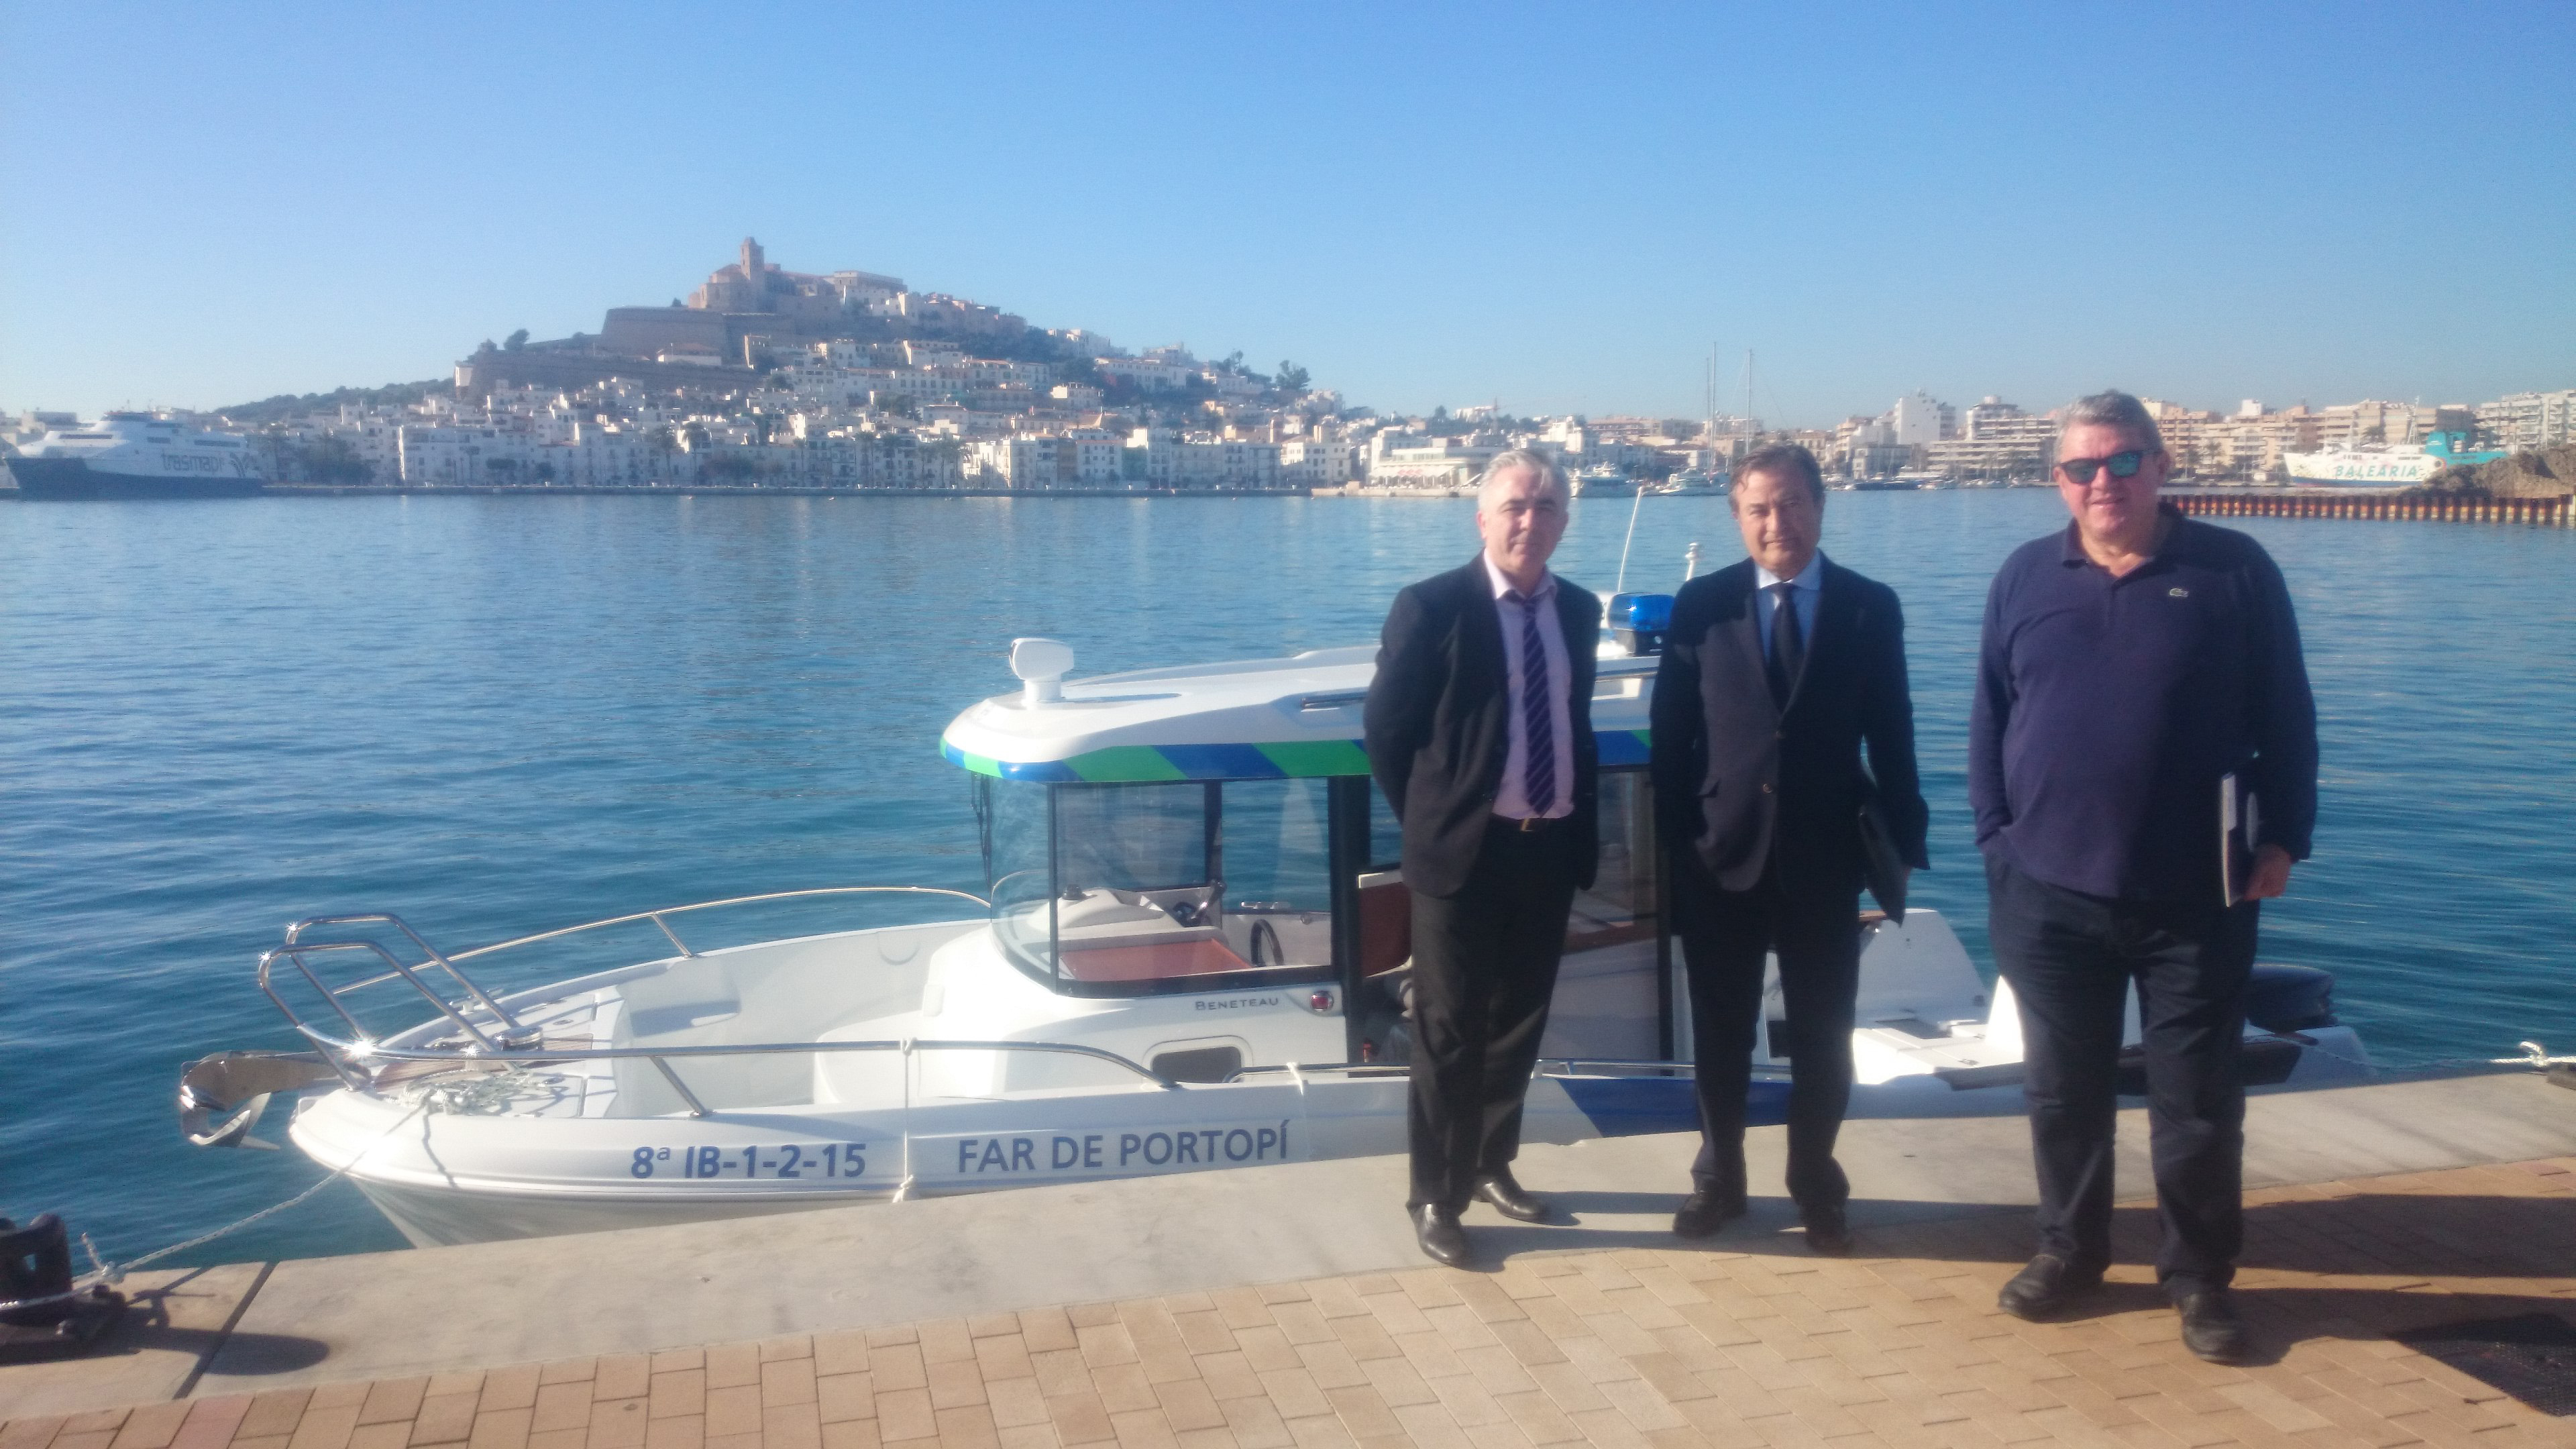 The APB presents two new port surveillance craft